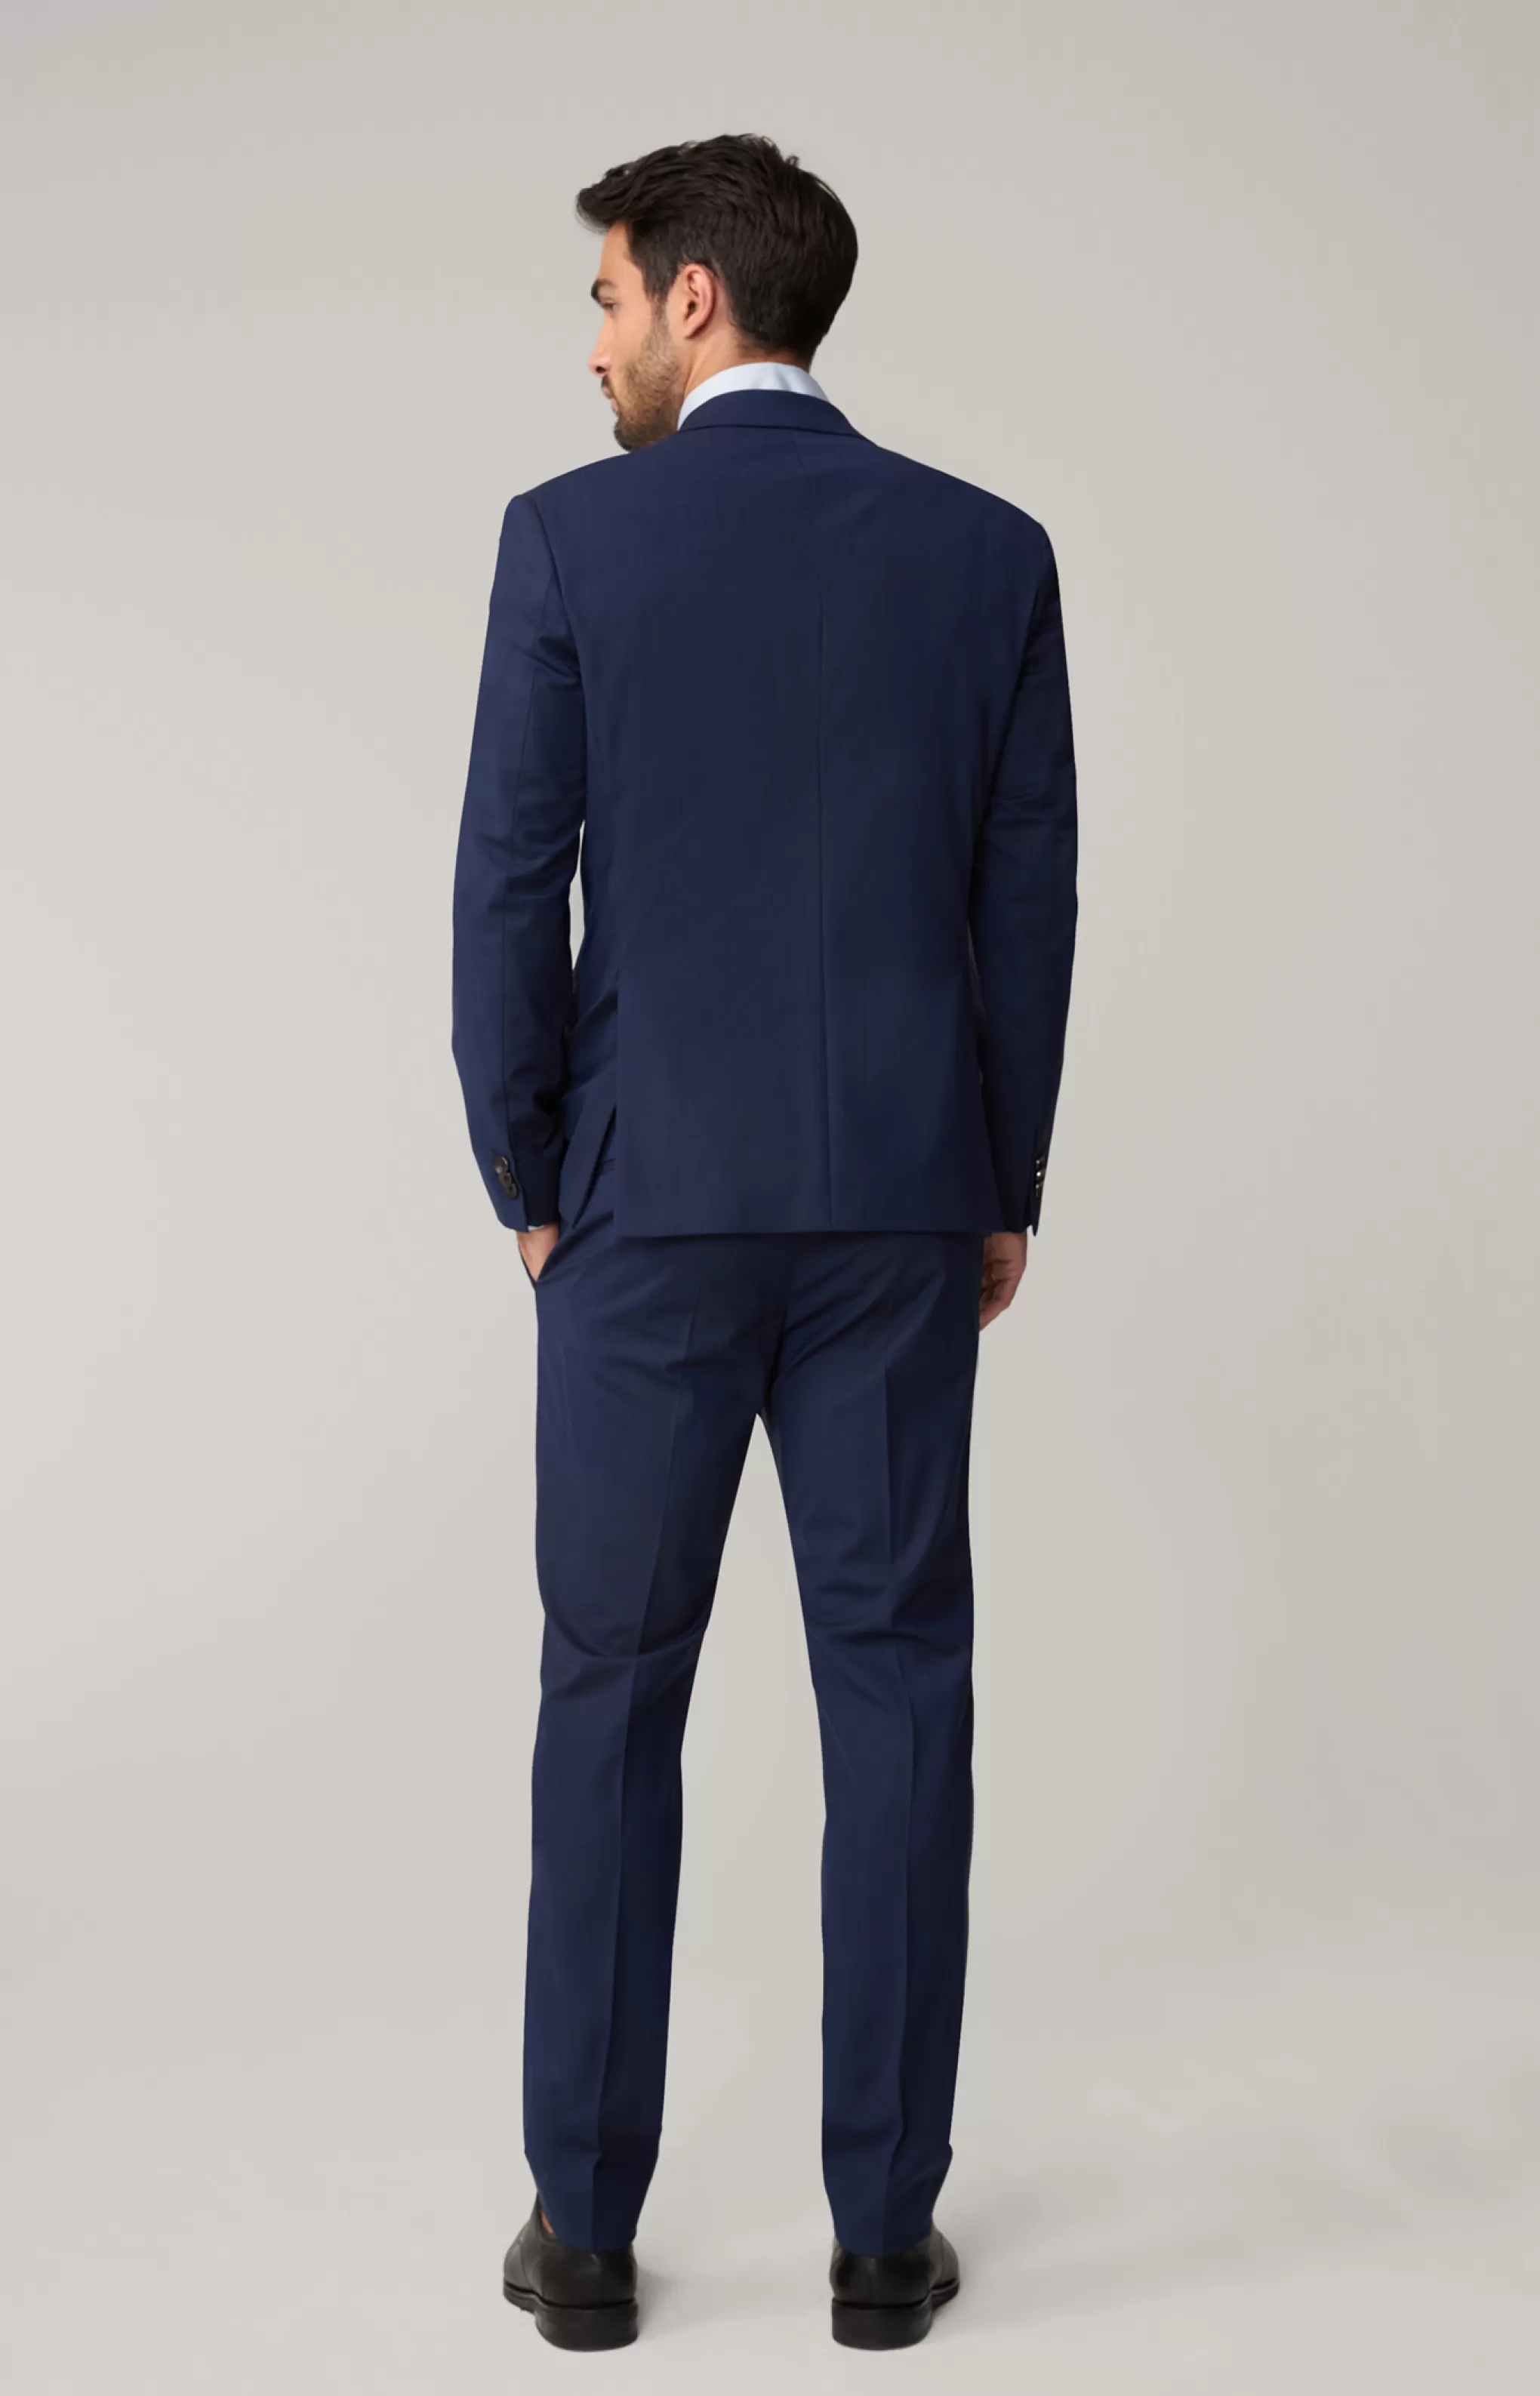 Suits | Clothing*JOOP Suits | Clothing Damon-Gun Suit in Navy Melange